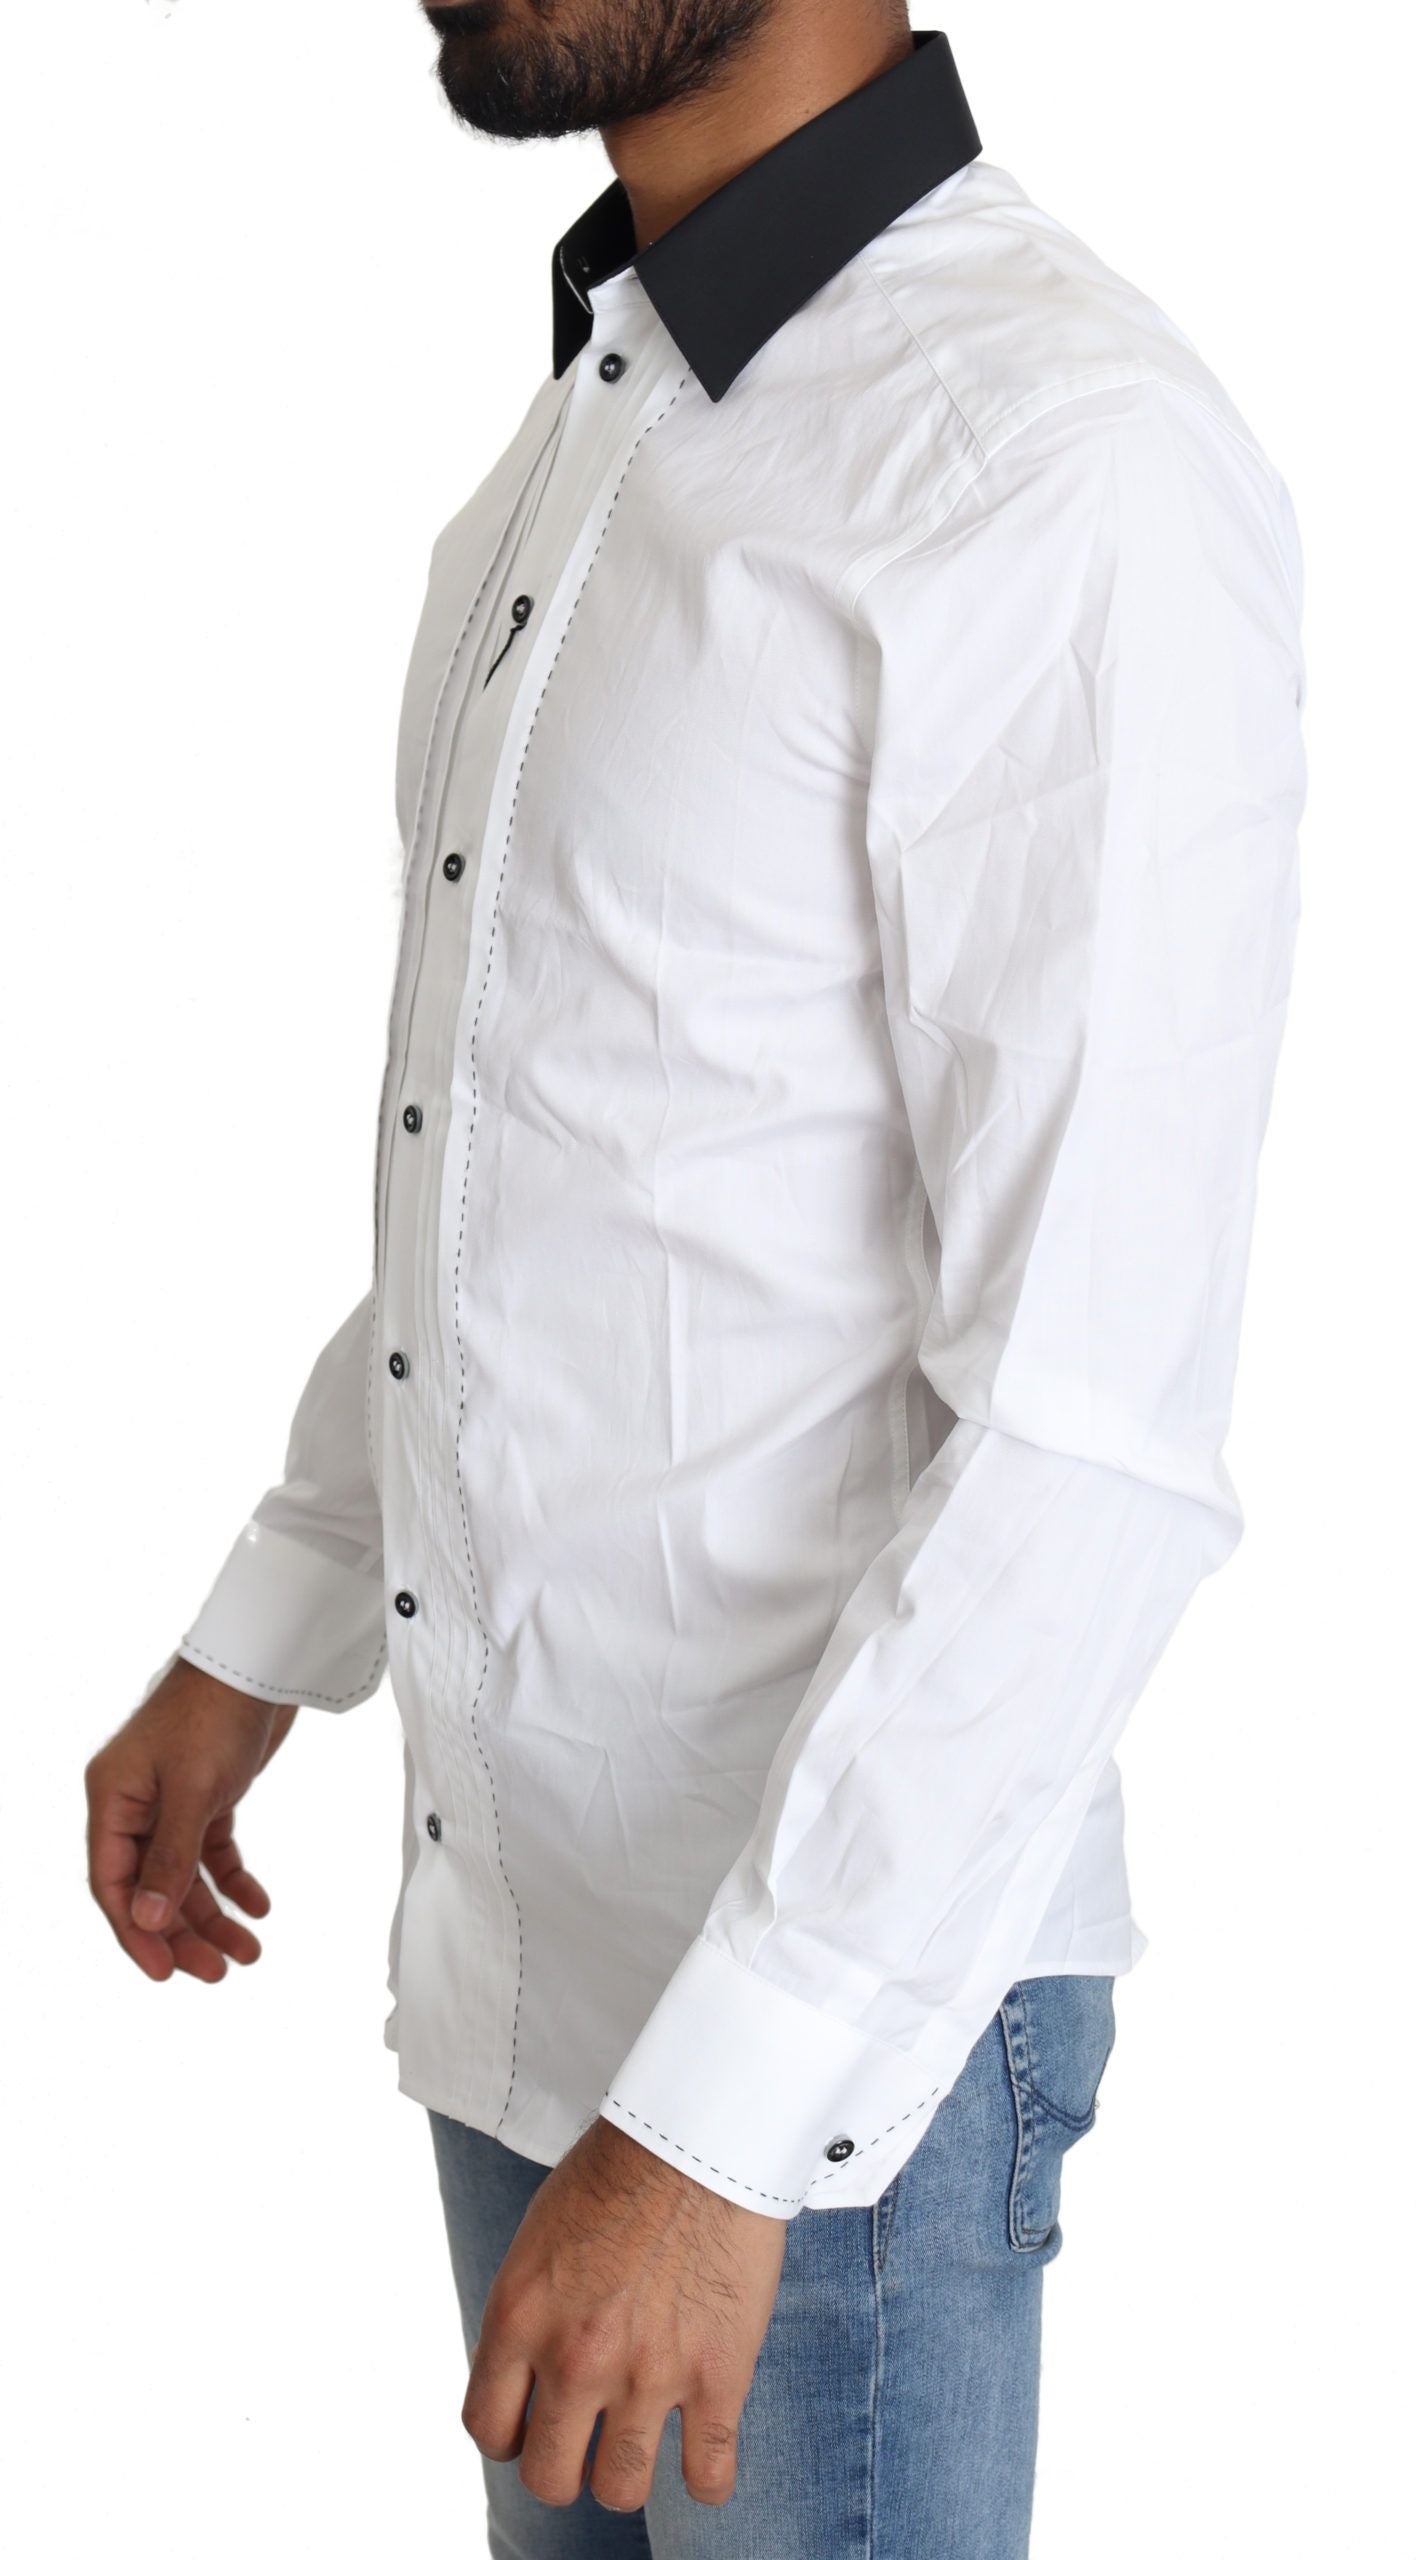 Dolce & Gabbana Elegant White Slim Fit Dress Shirt